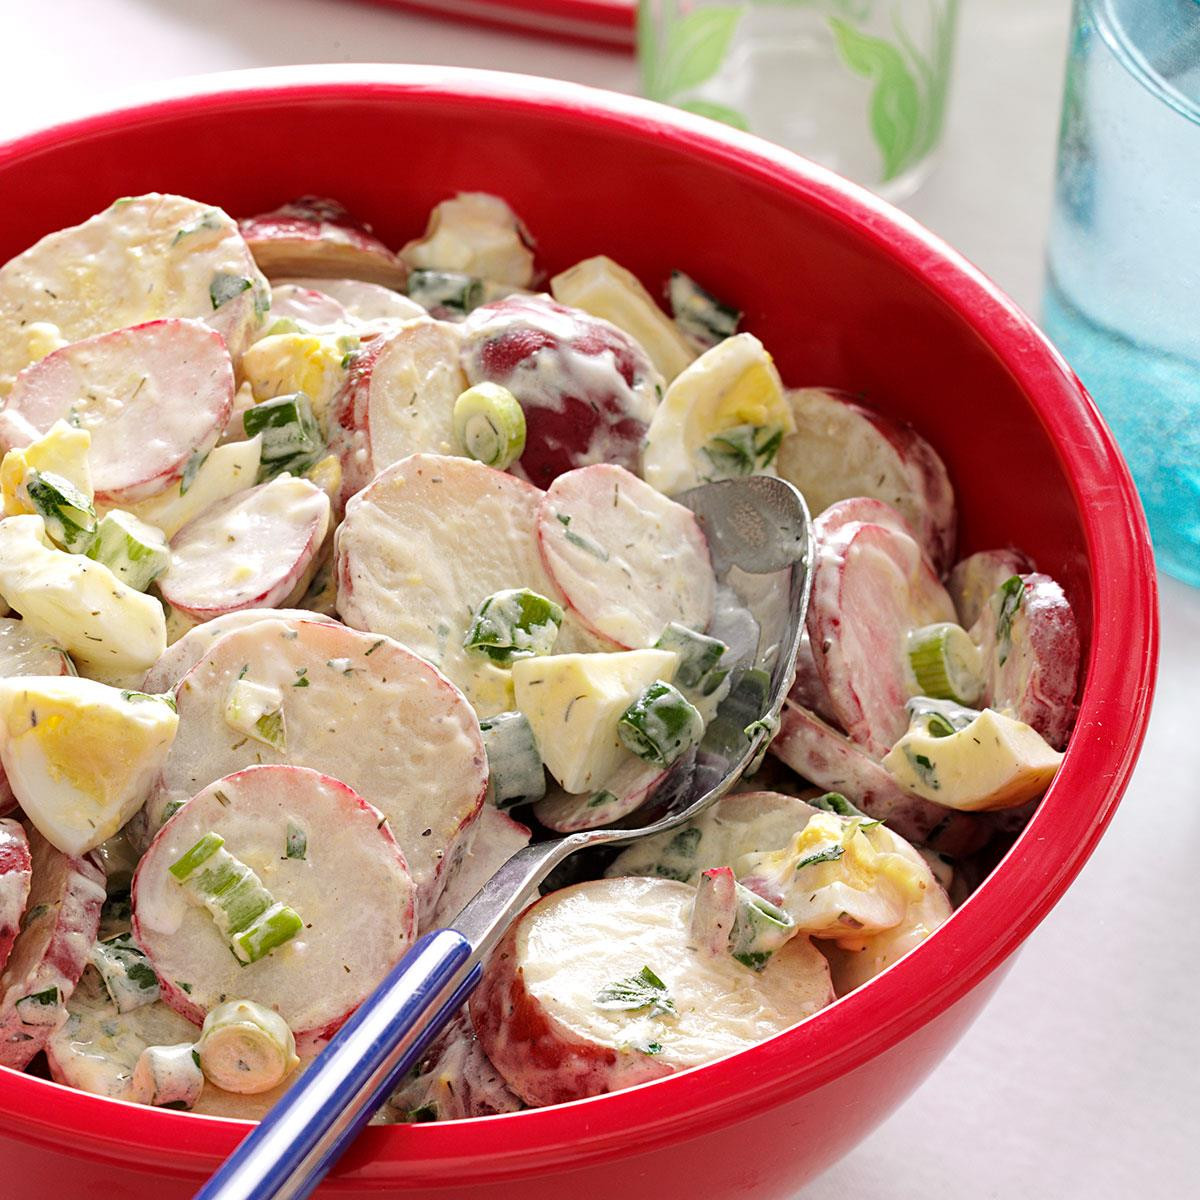 Red Potato Salad Recipes
 Creamy Red Potato Salad Recipe